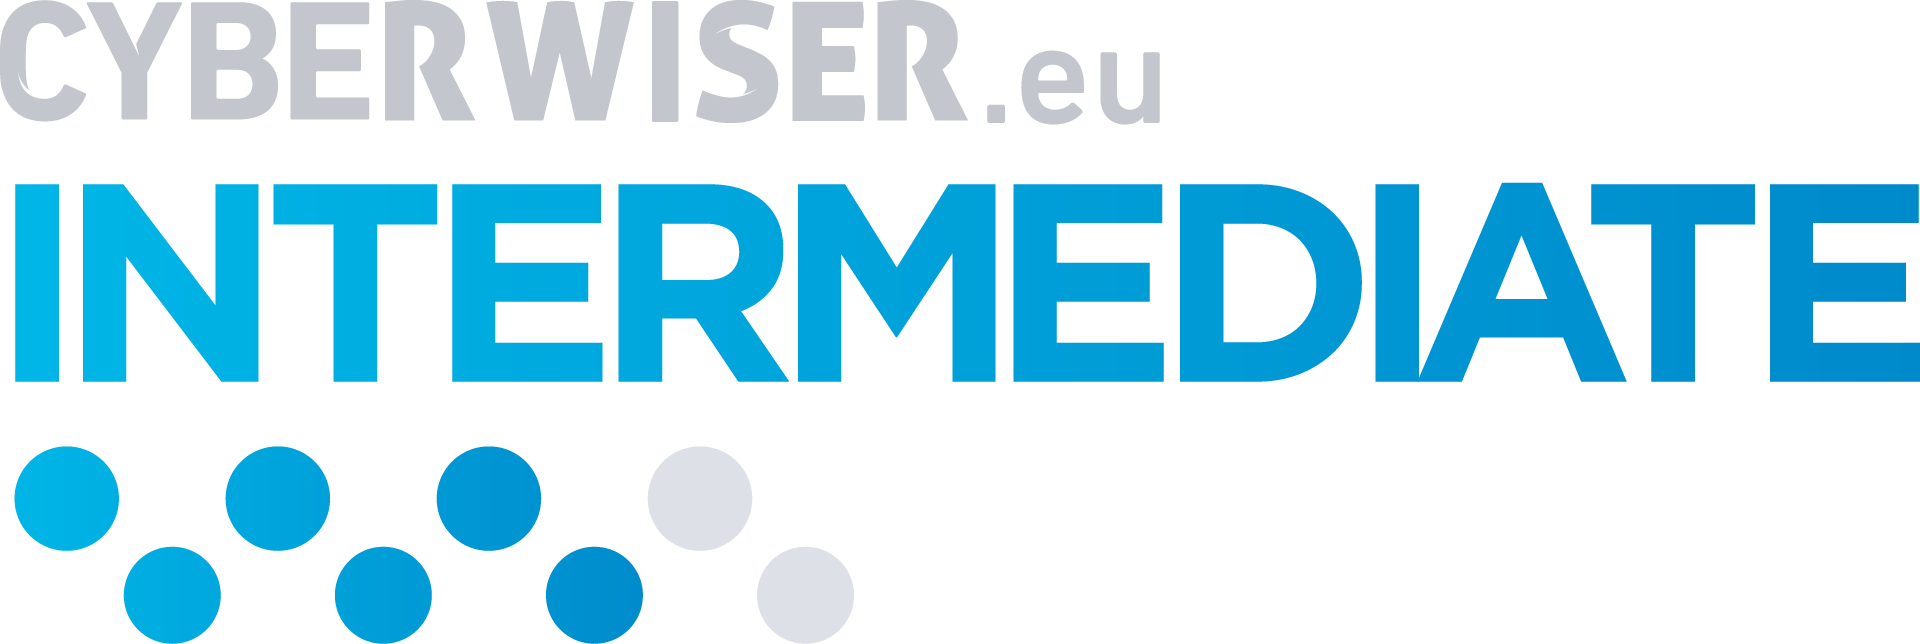 CYBERWISER.eu Intermediate